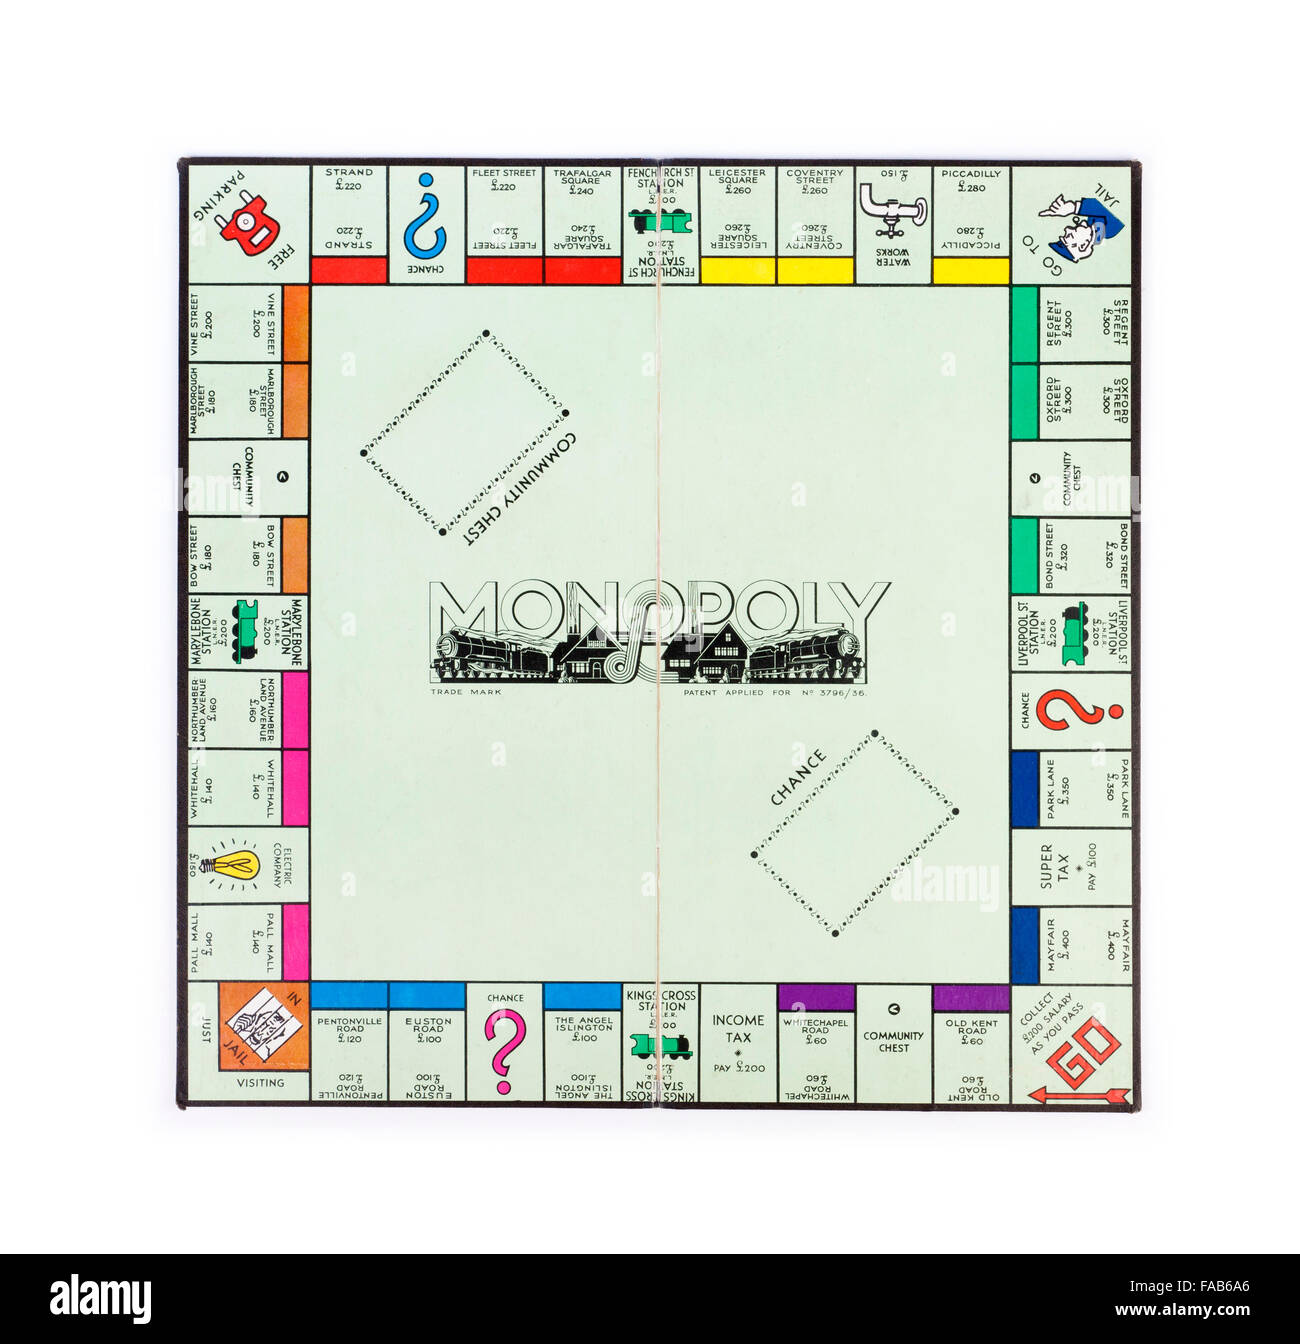 Monopoly board game fotografías e imágenes de alta resolución - Alamy